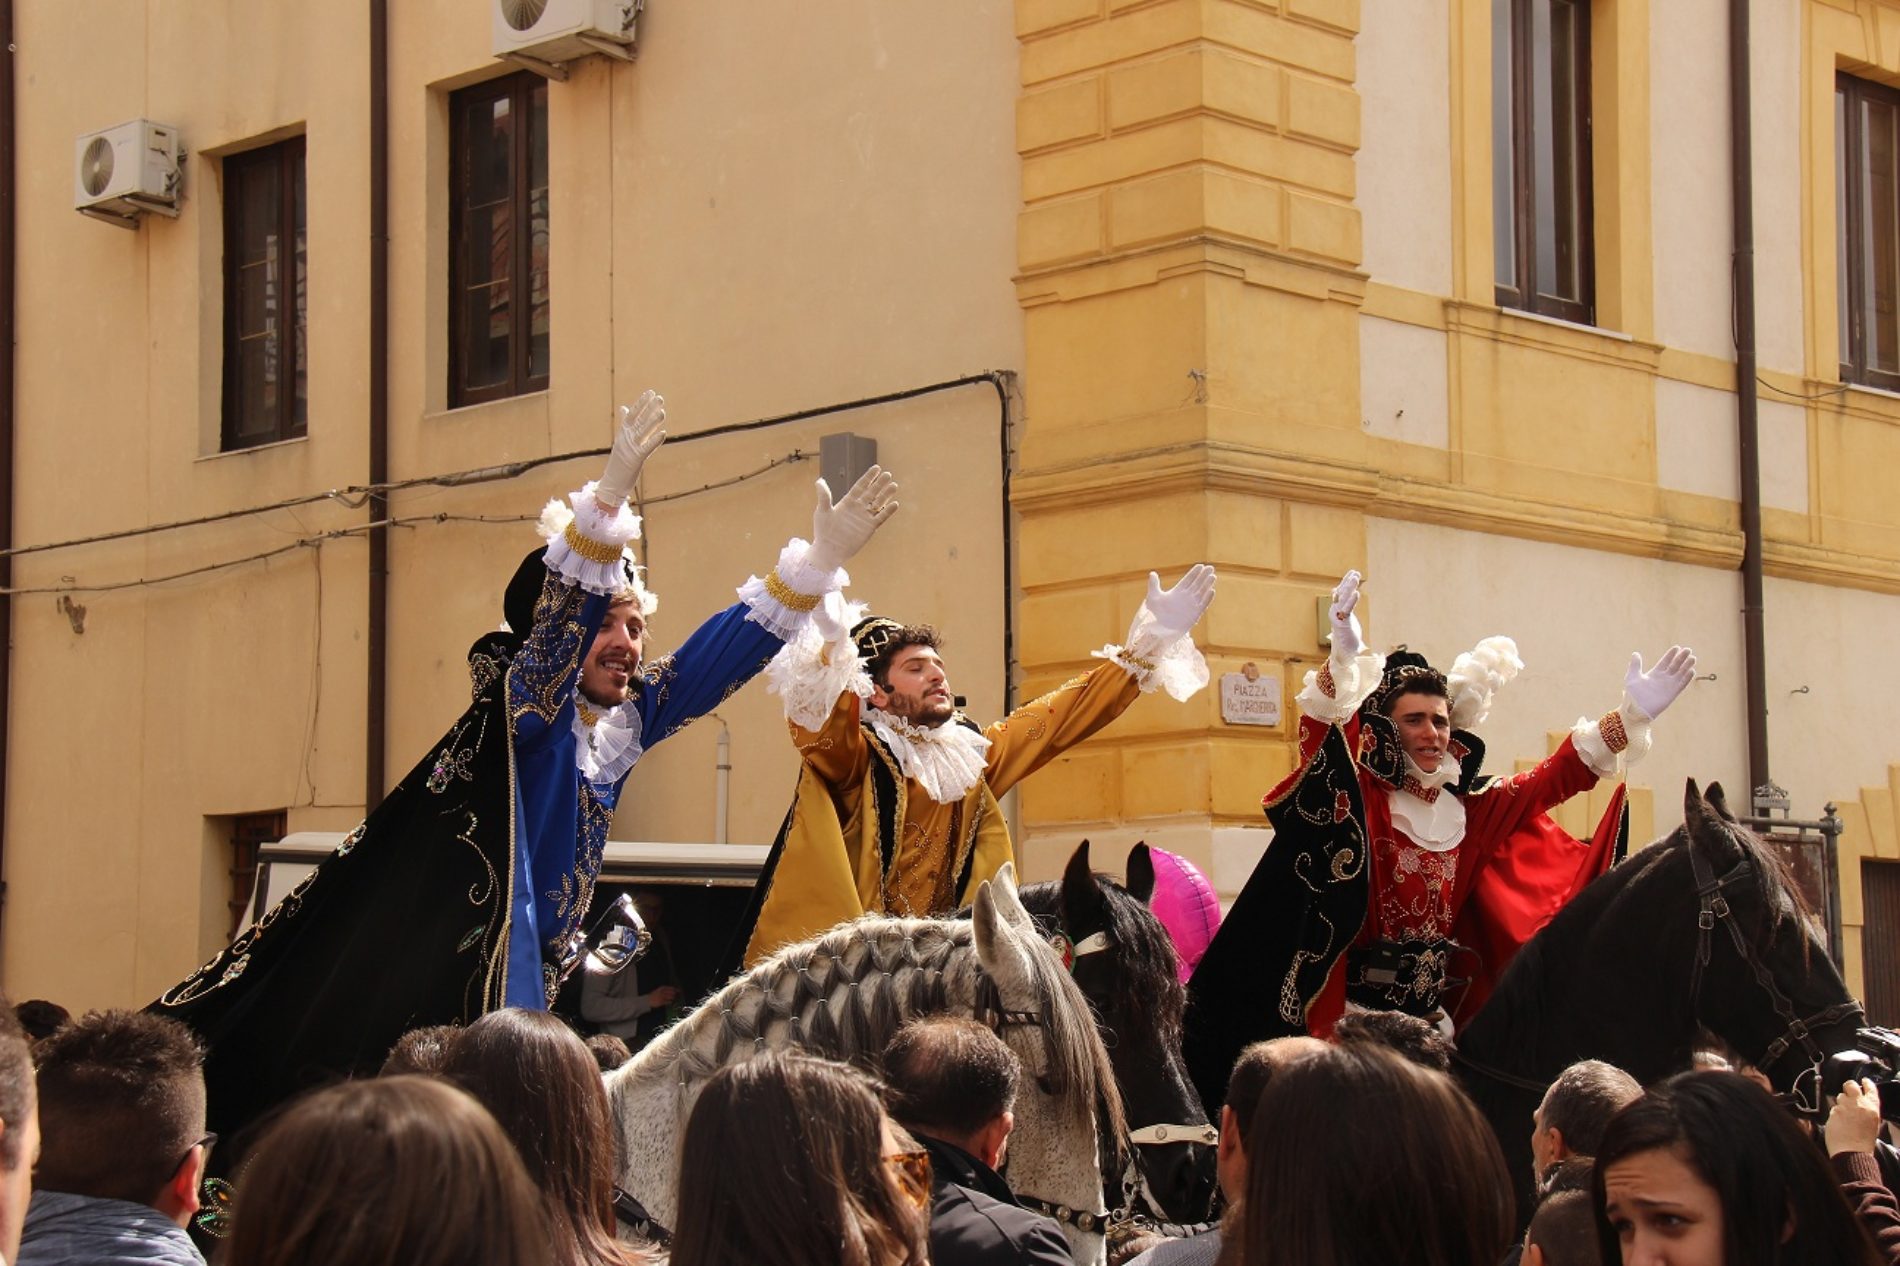 Festa di San Giuseppe: partecipata la sacra rappresentazione stamattina in piazza Regina Margherita: